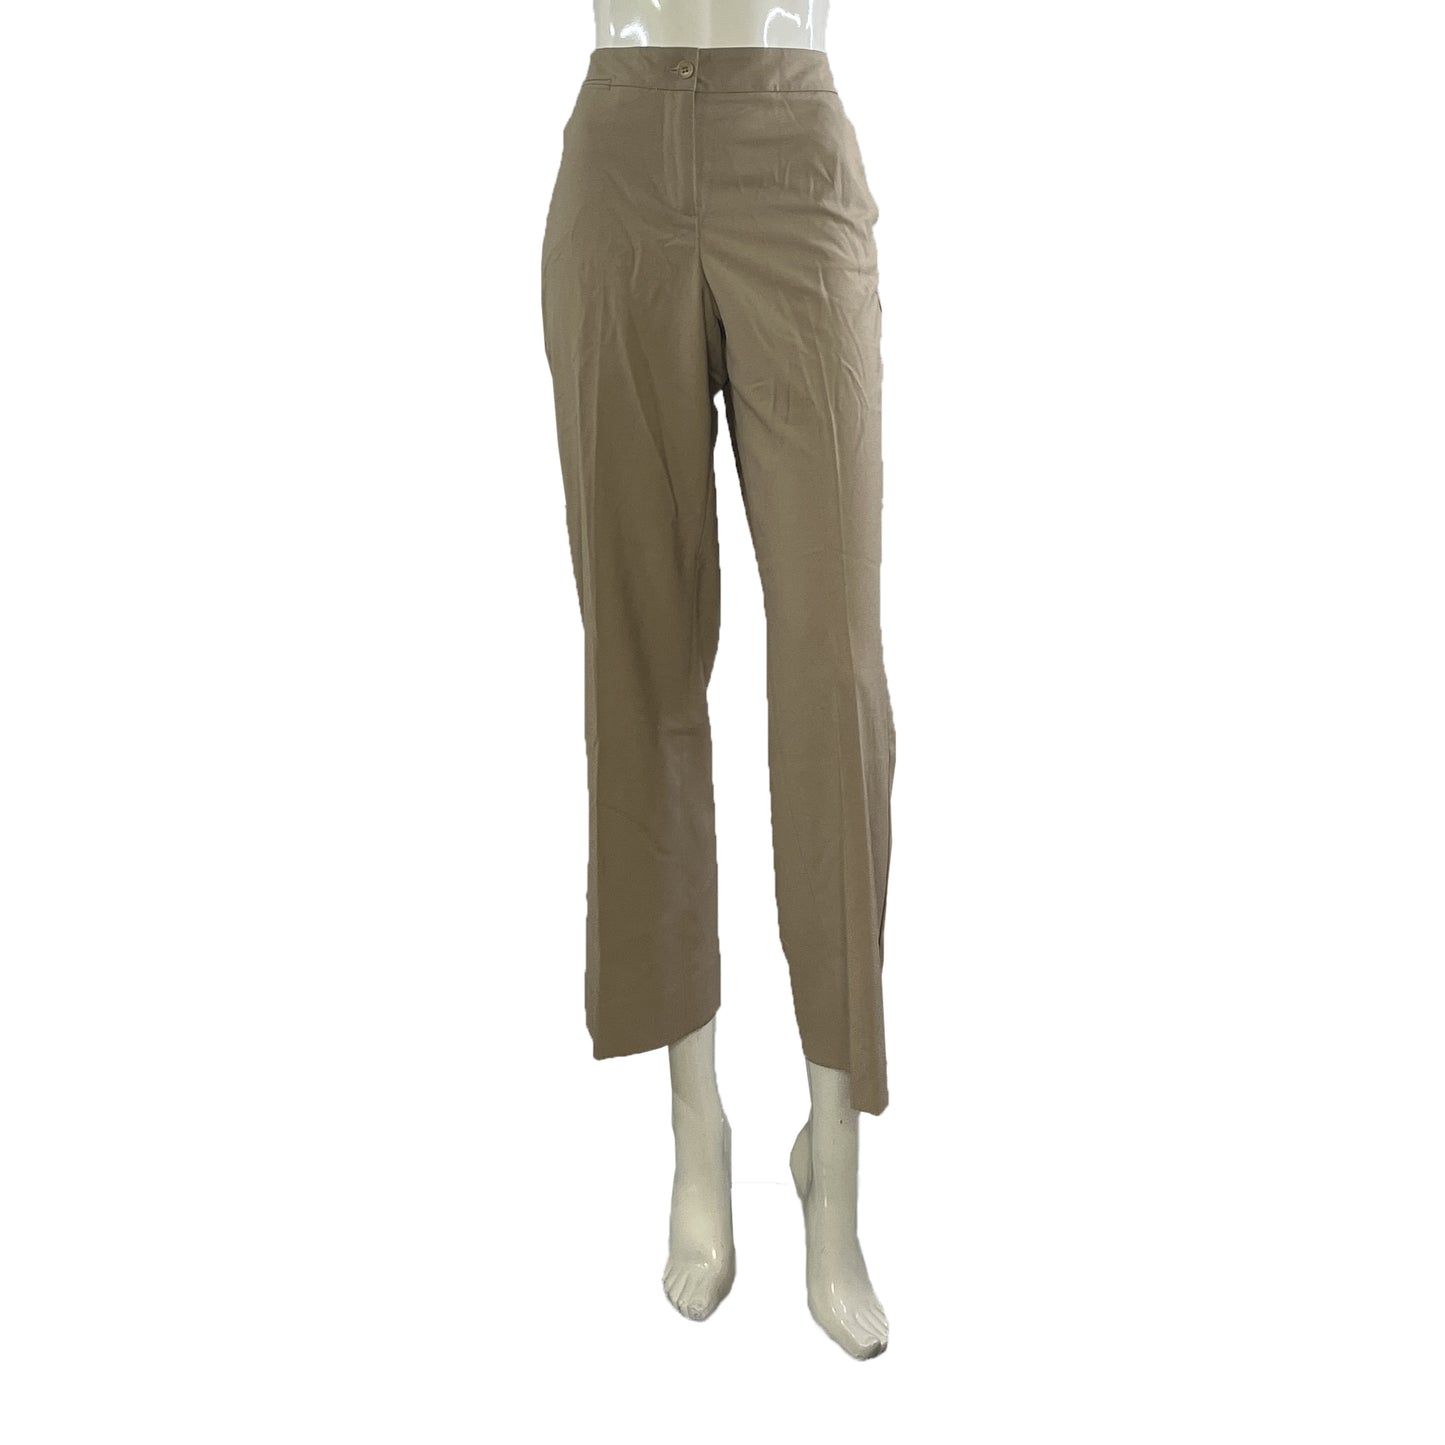 Talbots Dress Pants Tan Size 8 SKU 000416